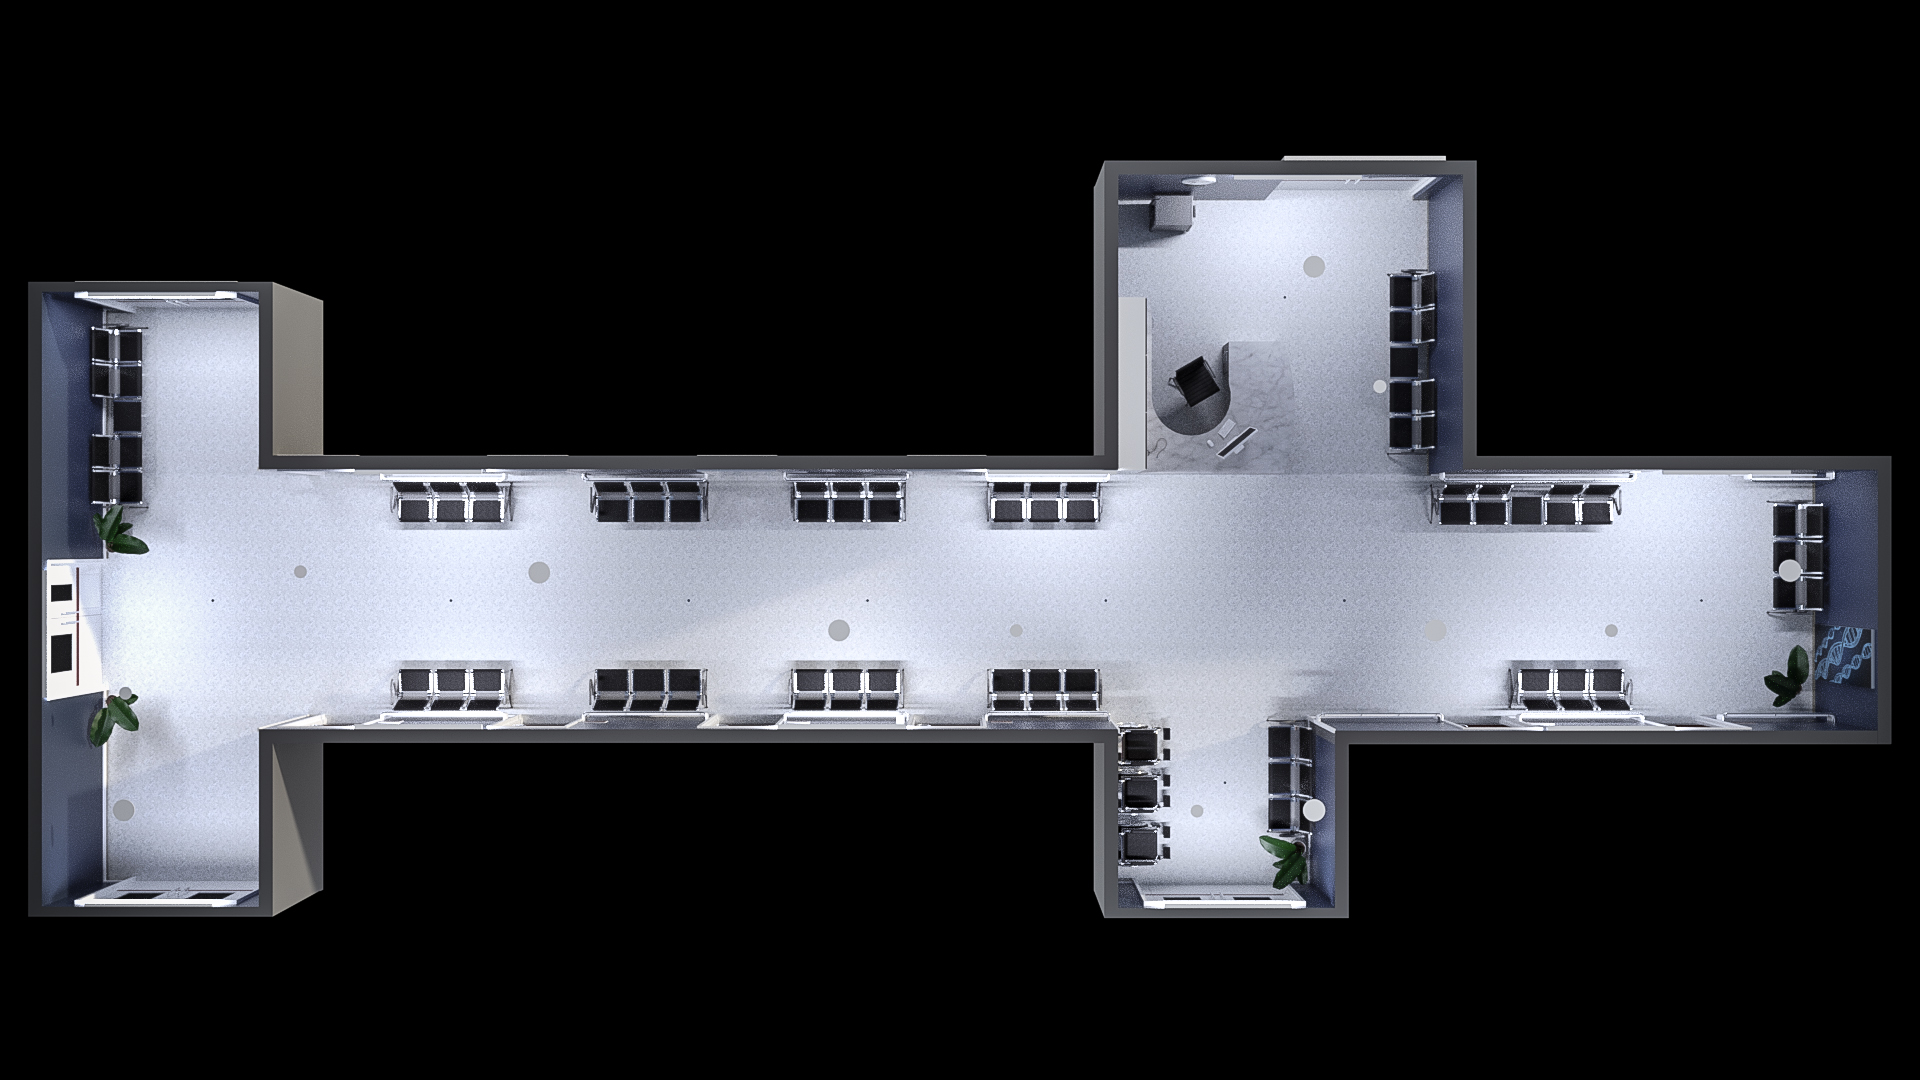 TS Hospital Corridor by: Tesla3dCorp, 3D Models by Daz 3D